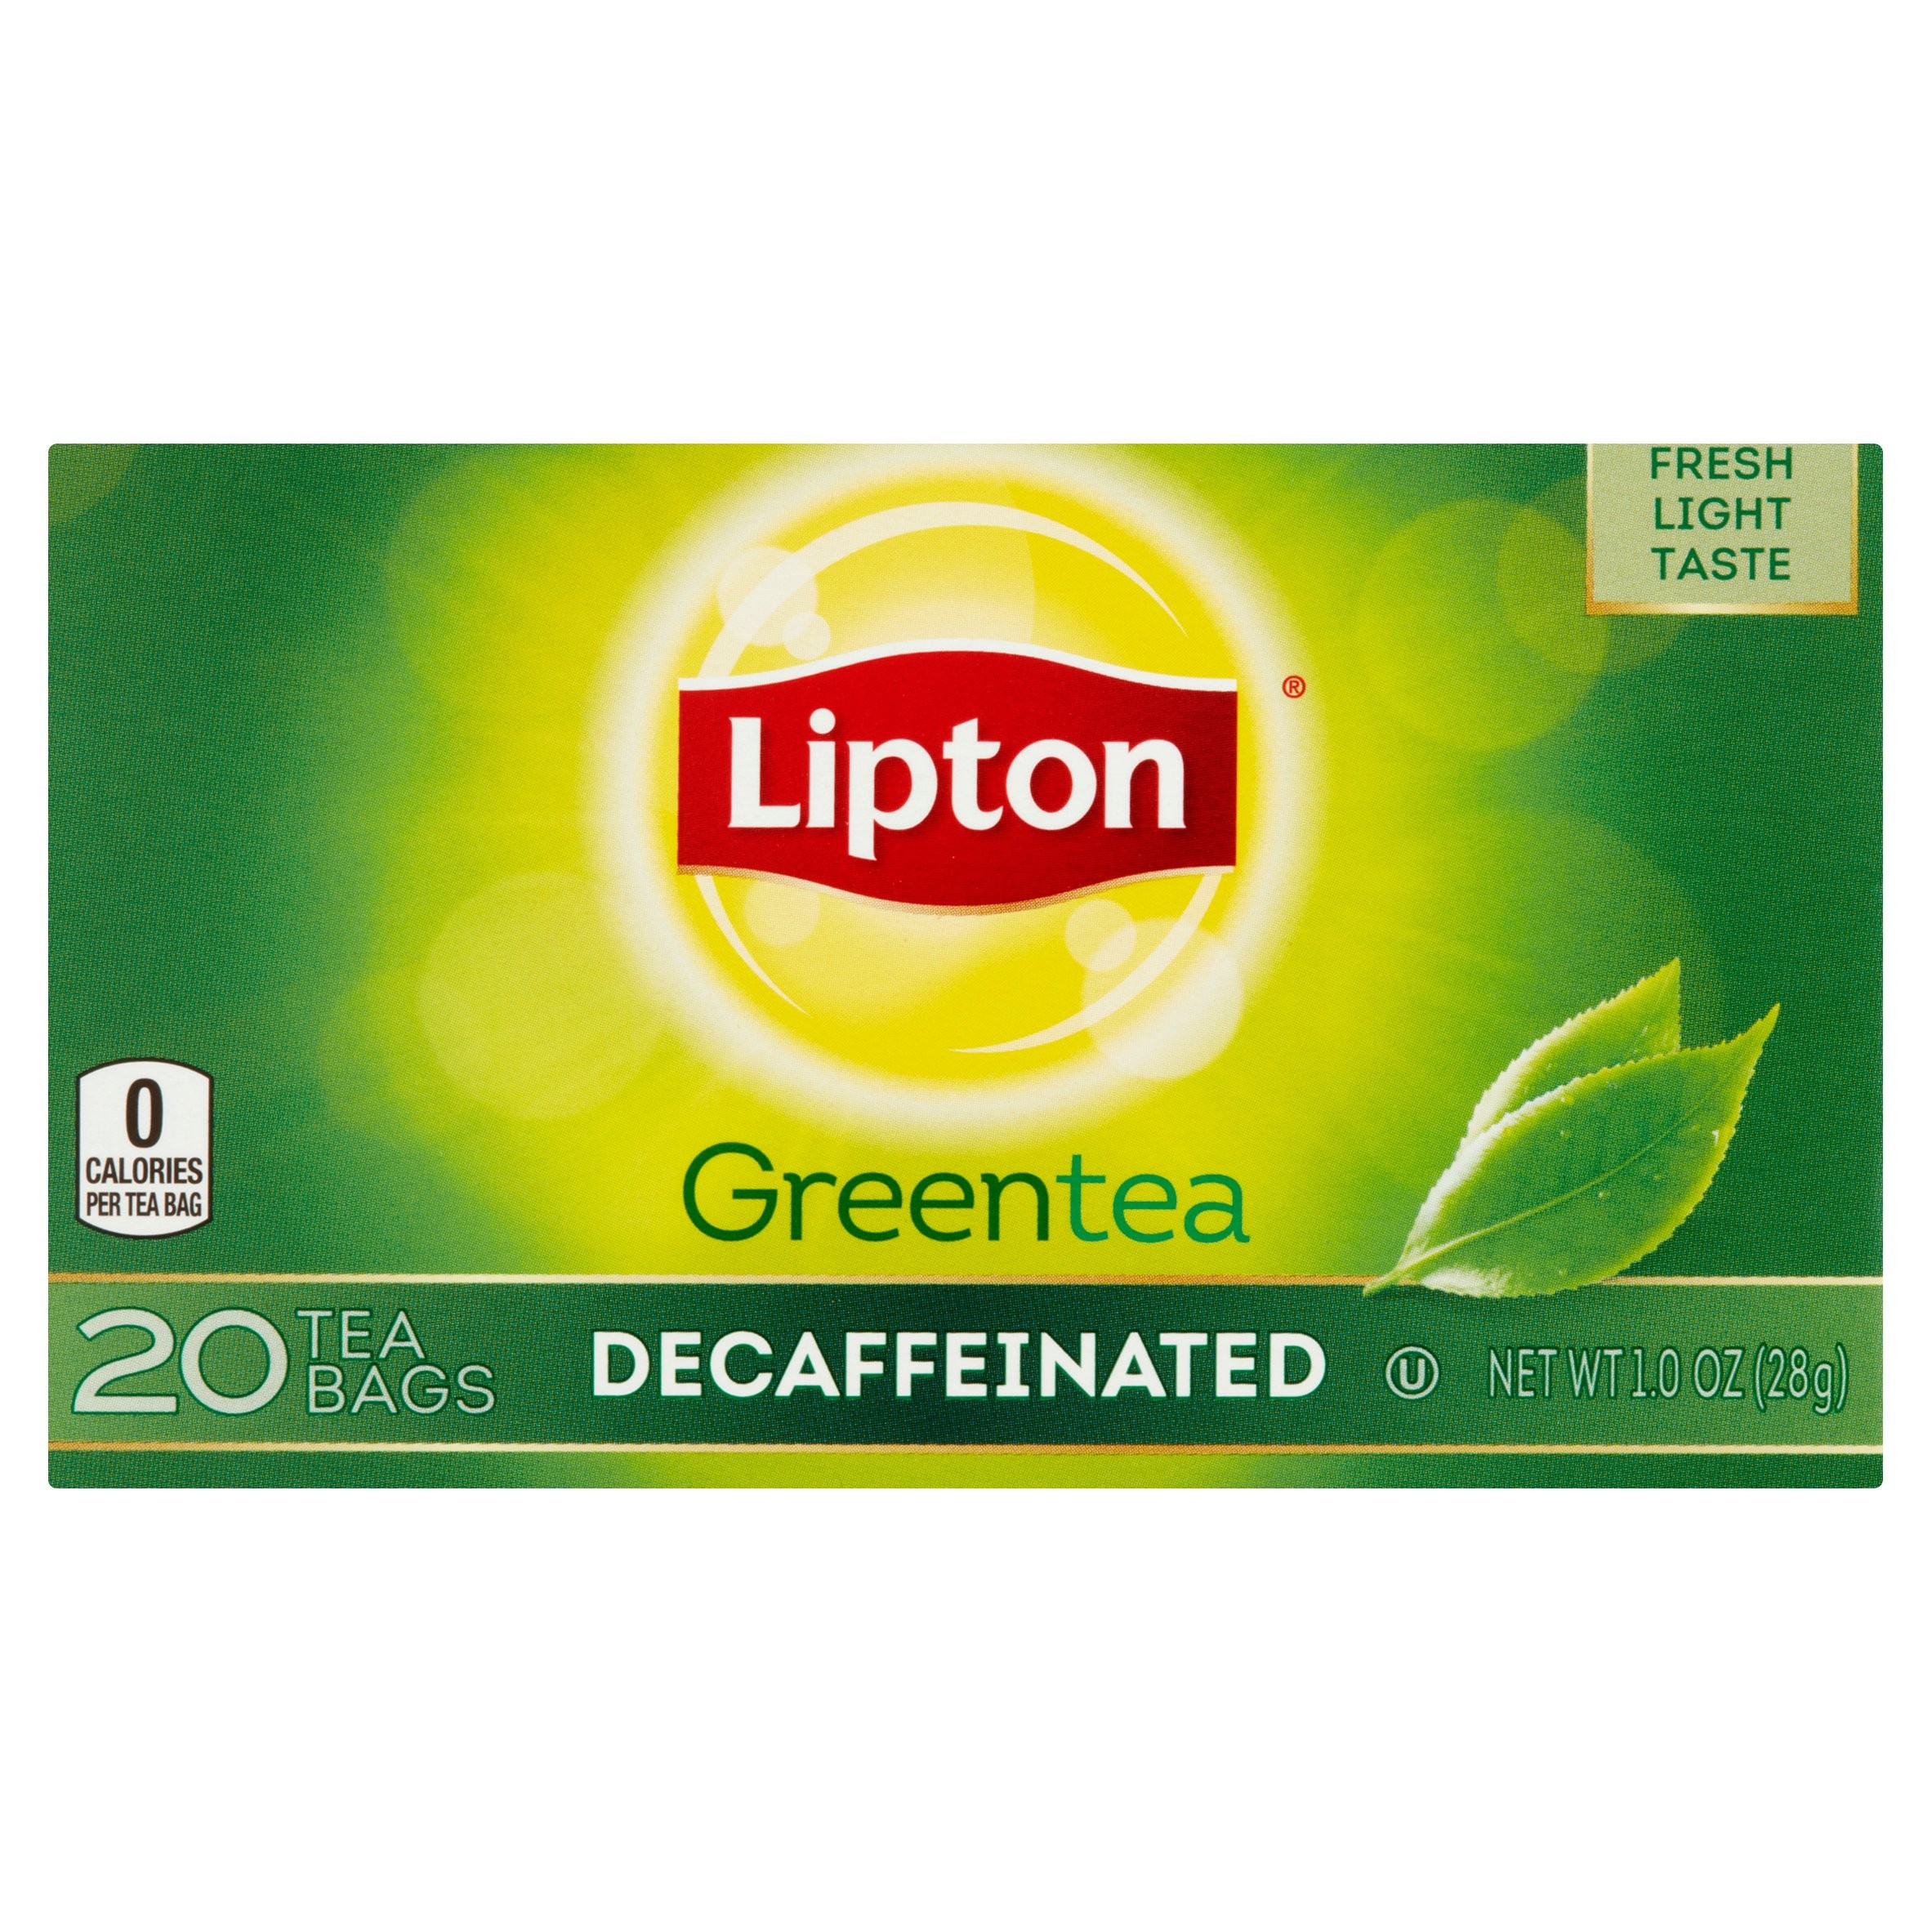 Липтон дома. Чай Липтон с анисом. Липтон зеленый чай логотип. Липтон зеленый чай этикетка. Липтон Грин ти логотип.